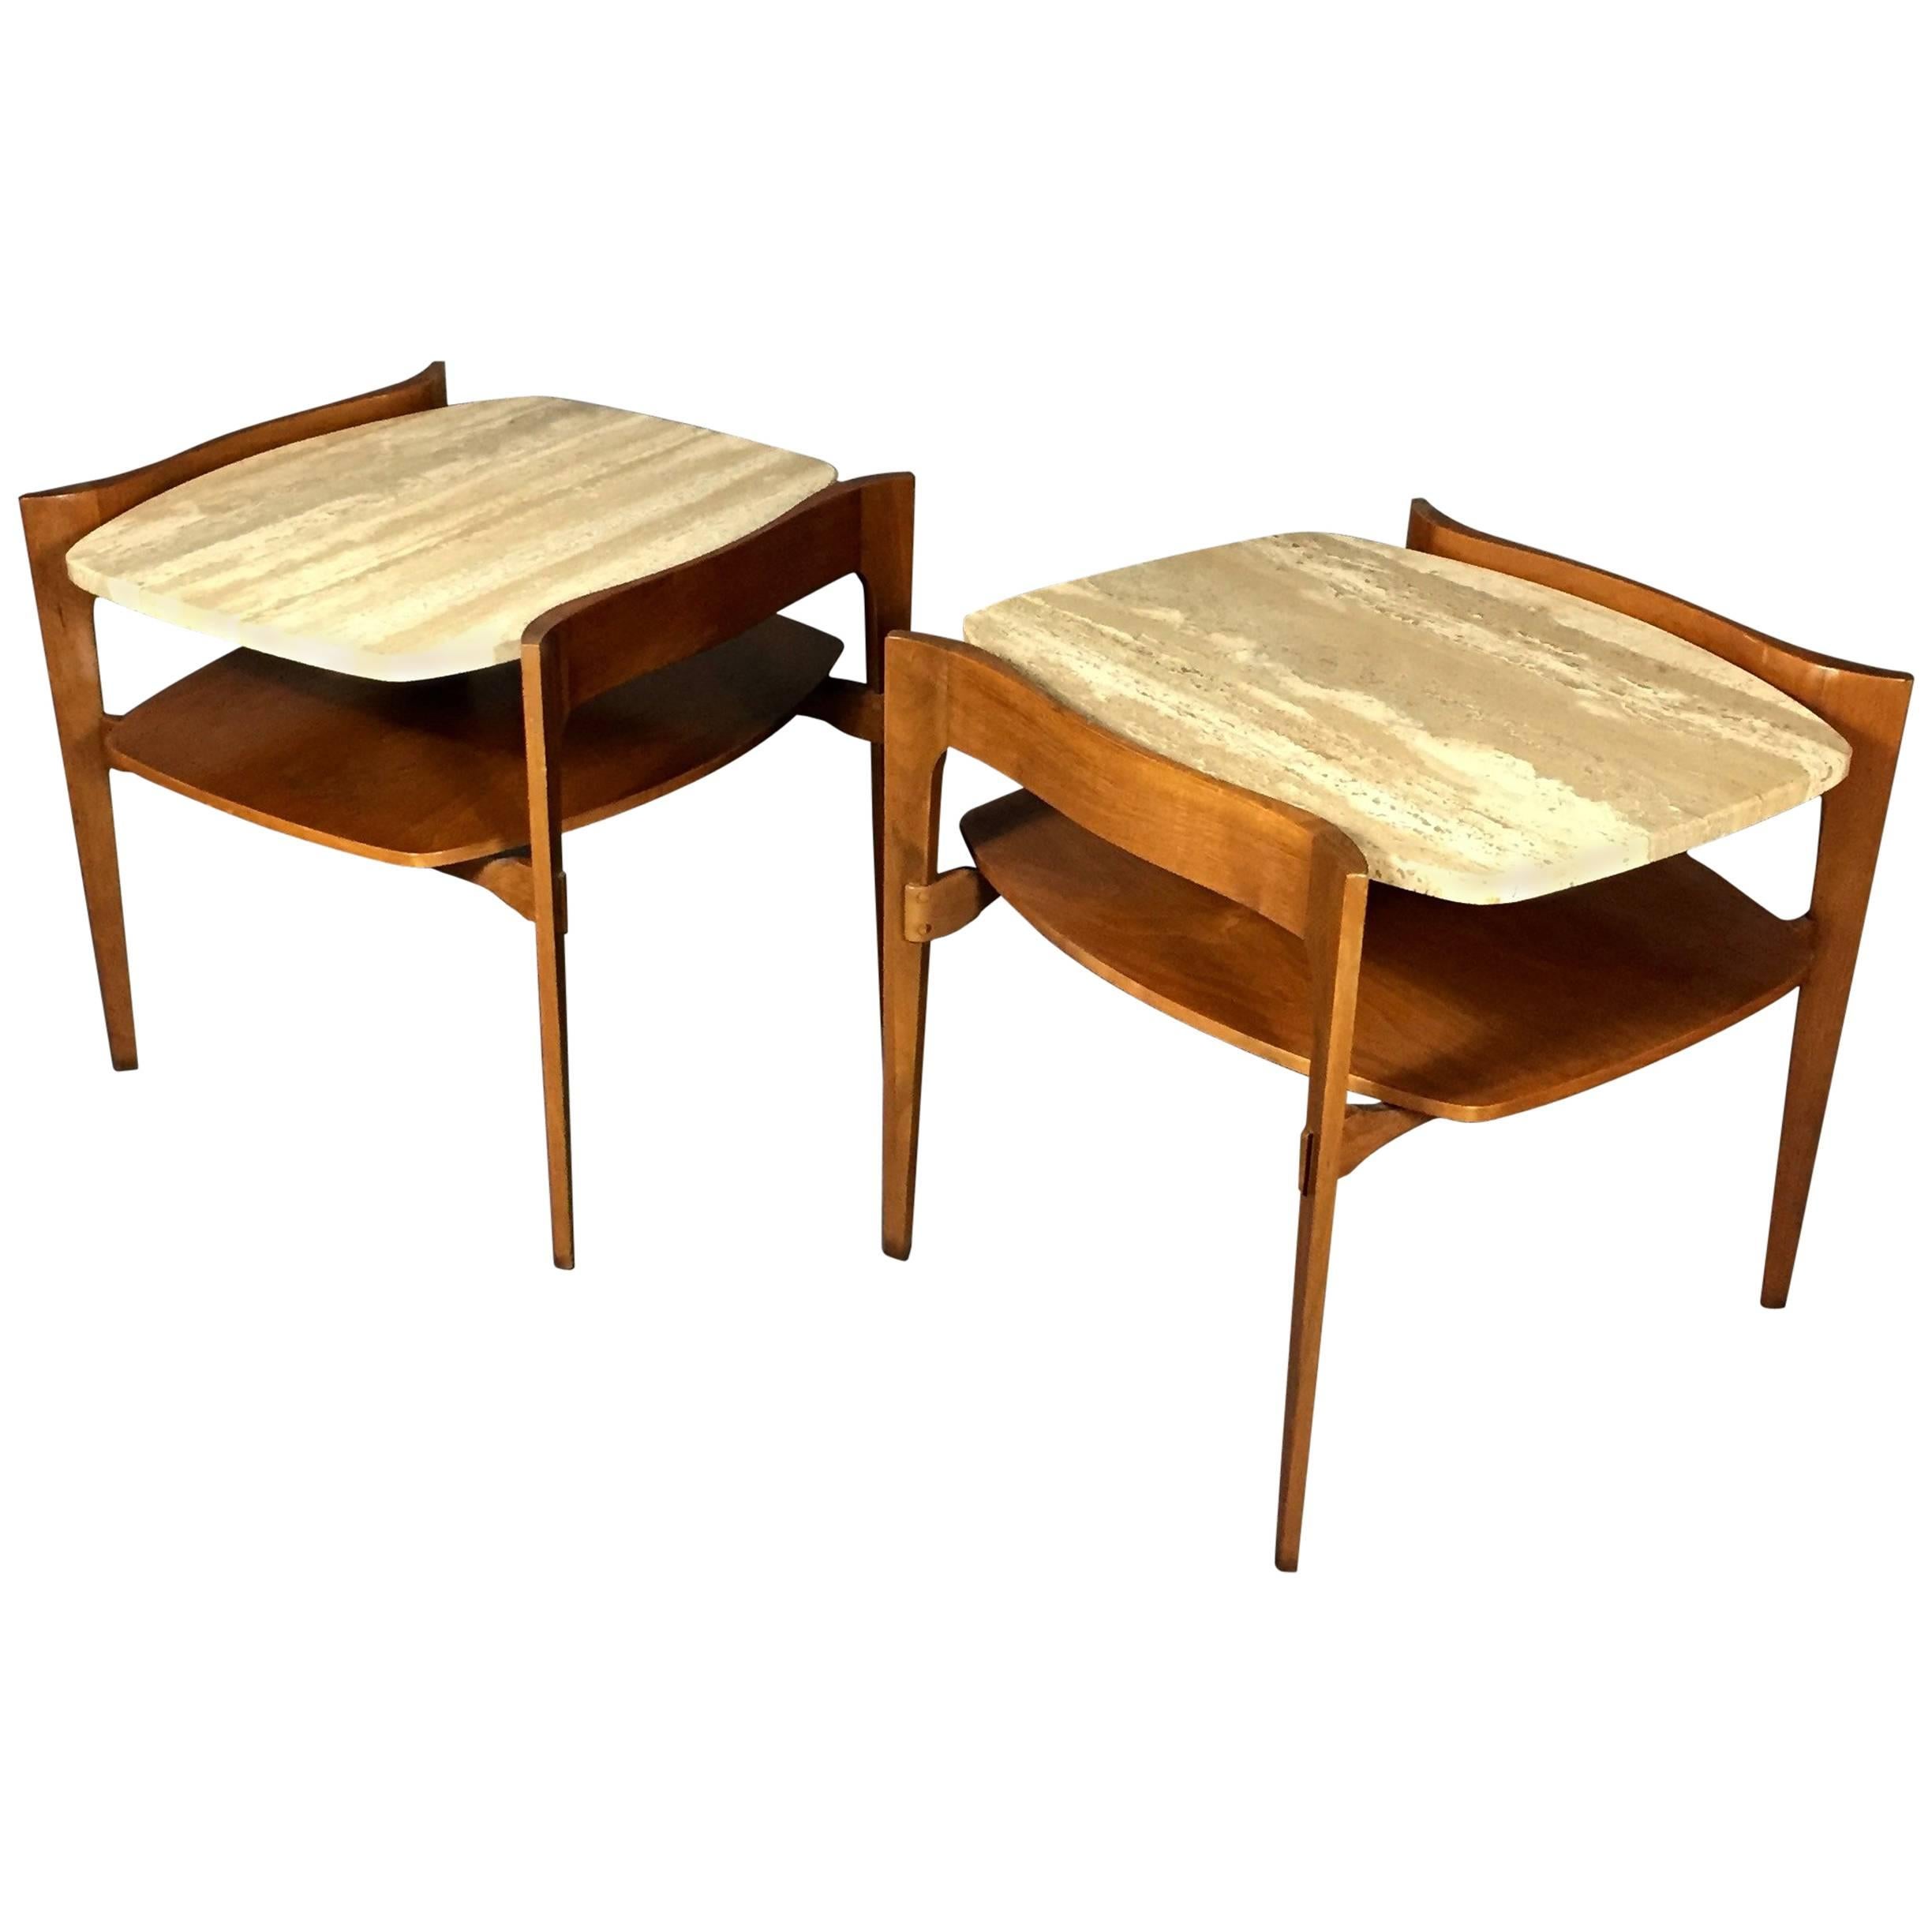 Pair of Italian Travertine and Walnut End Tables, Walker Zanger, 1960s